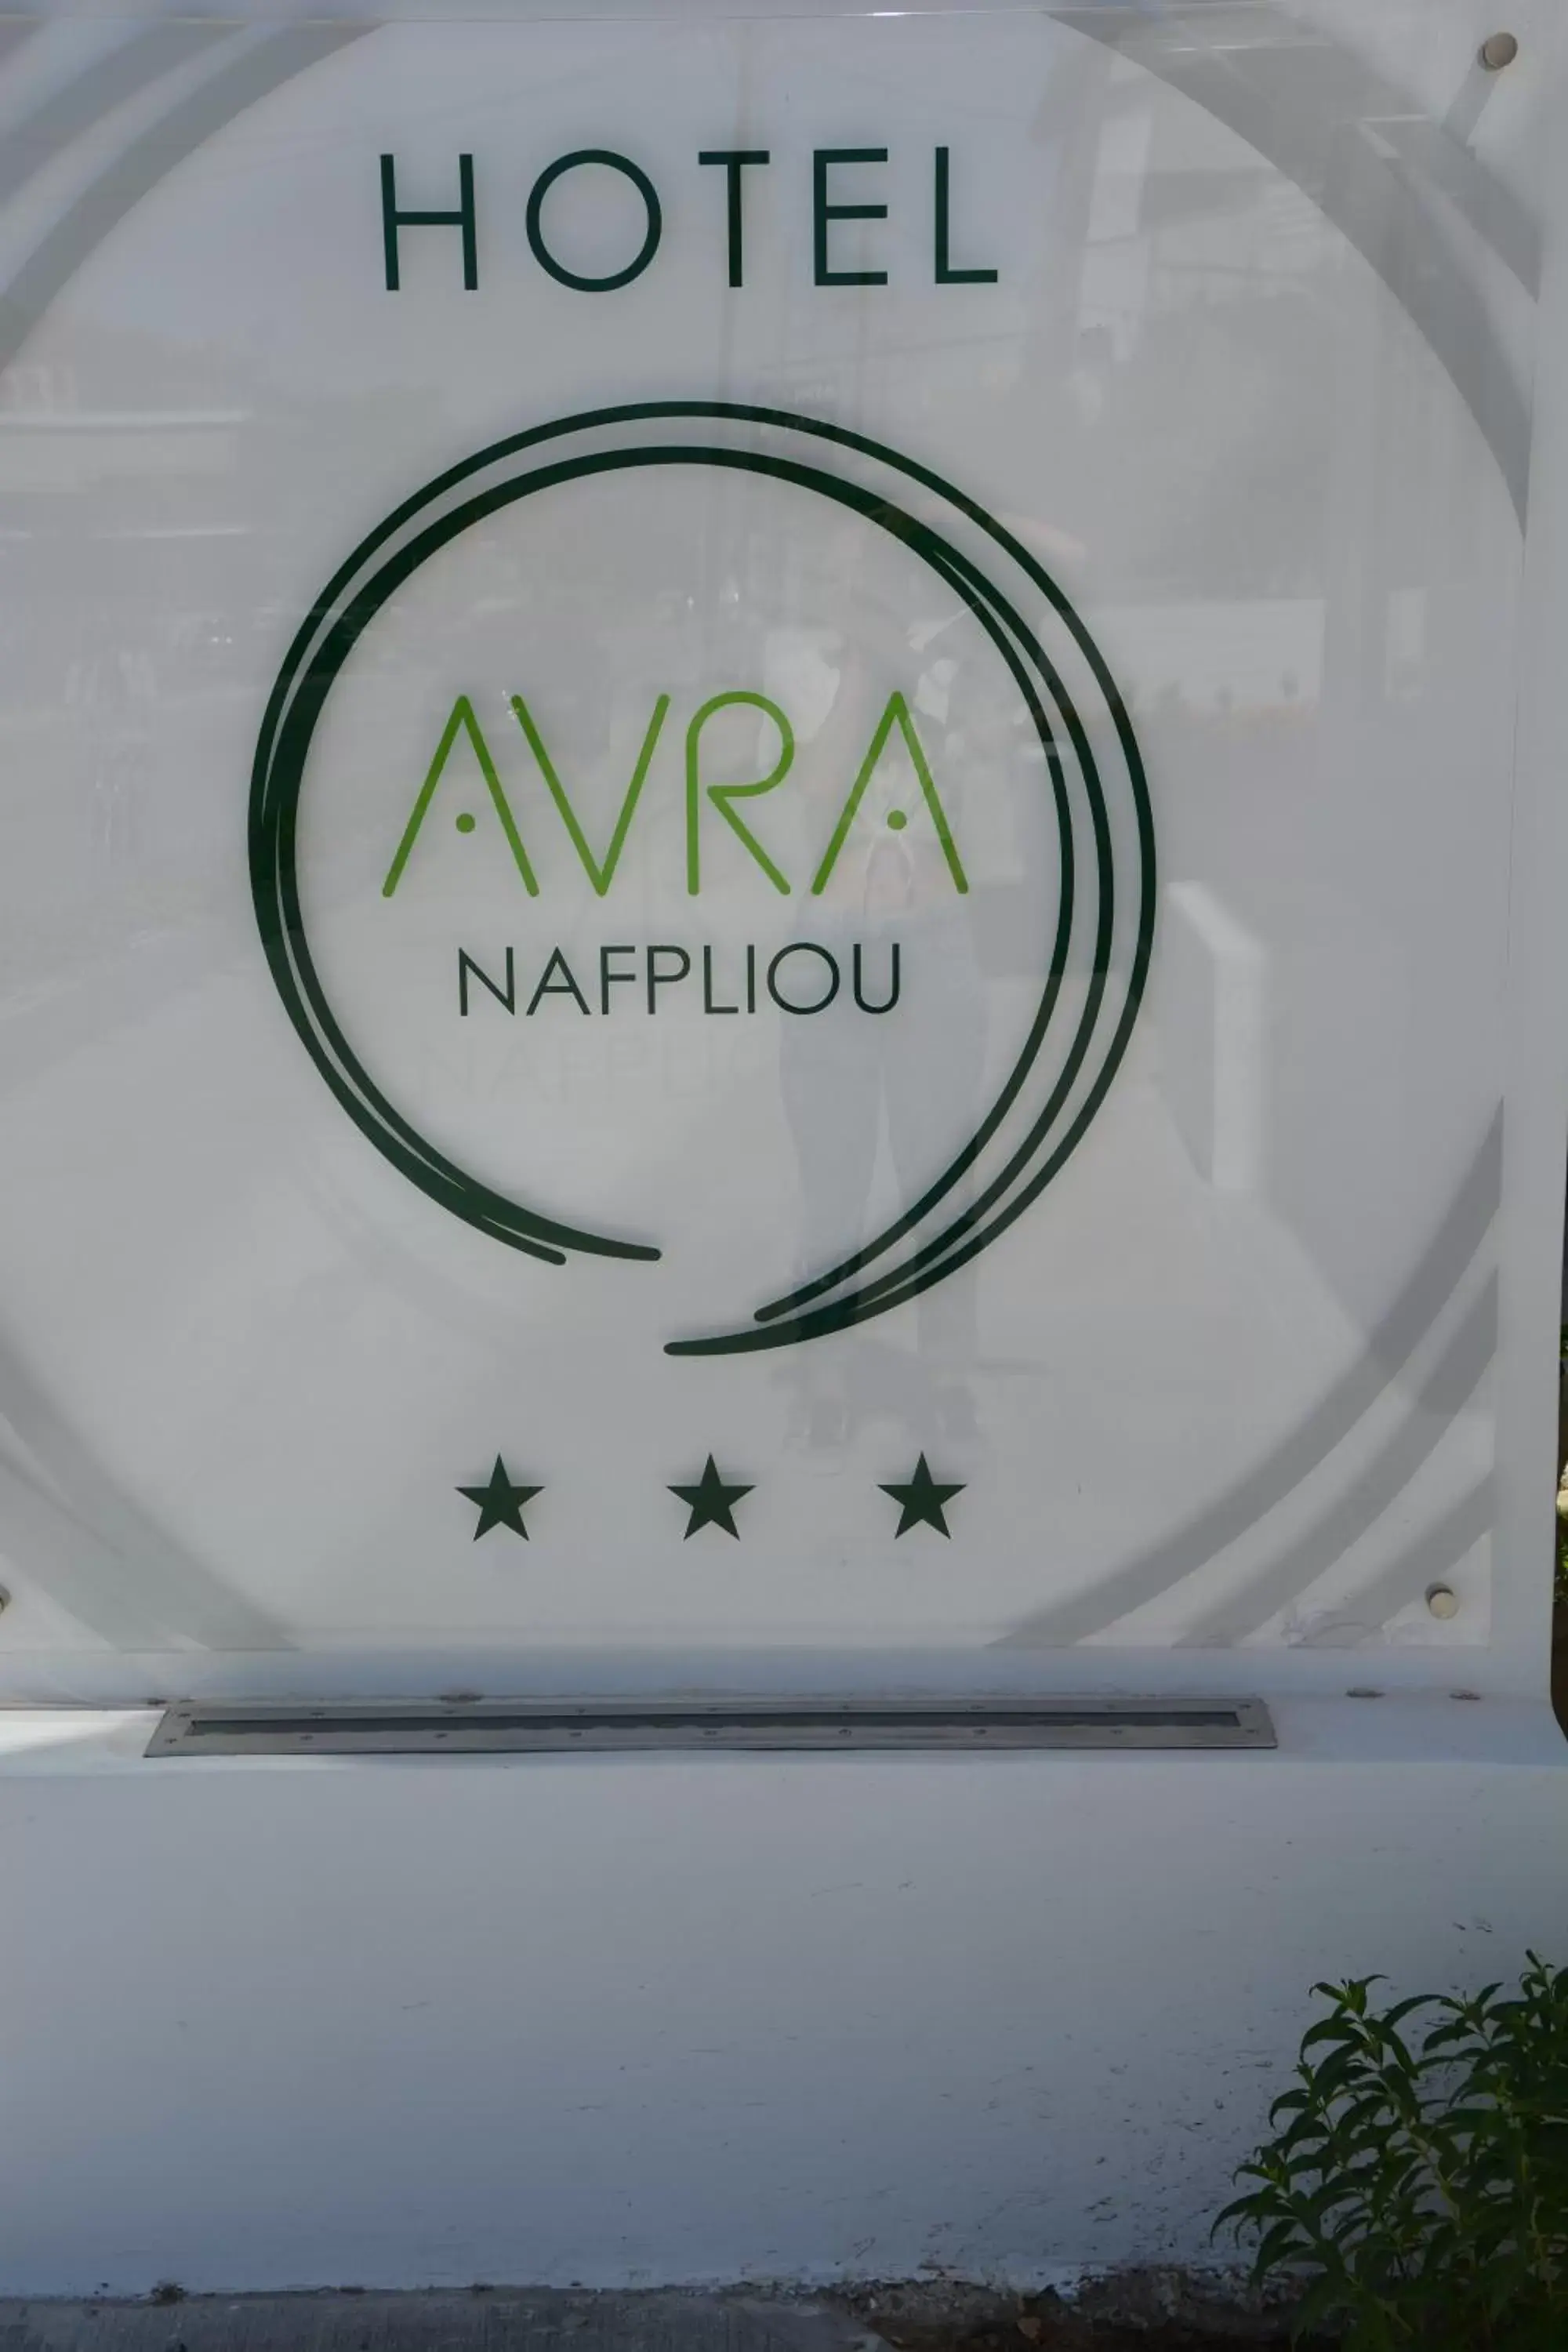 Property logo or sign in Avra Nafpliou